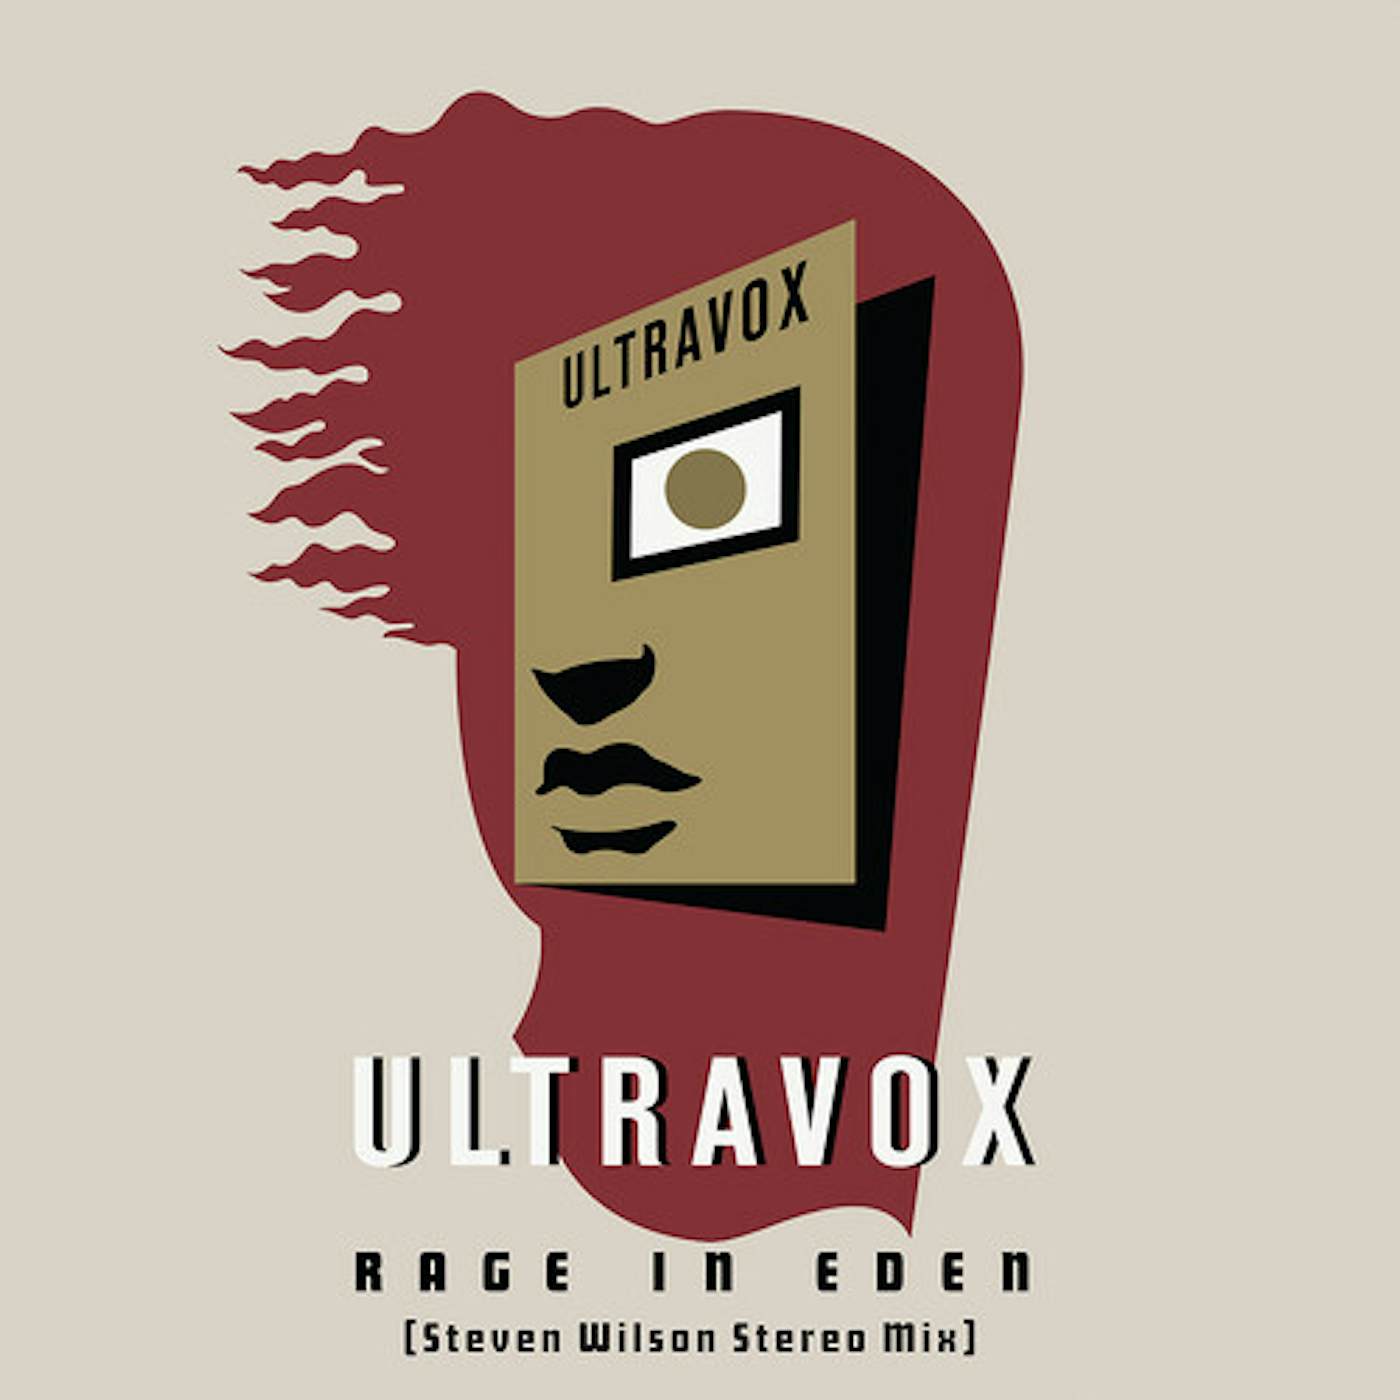 Ultravox RAGE IN EDEN (STEVEN WILSON STEREO MIX) Vinyl Record